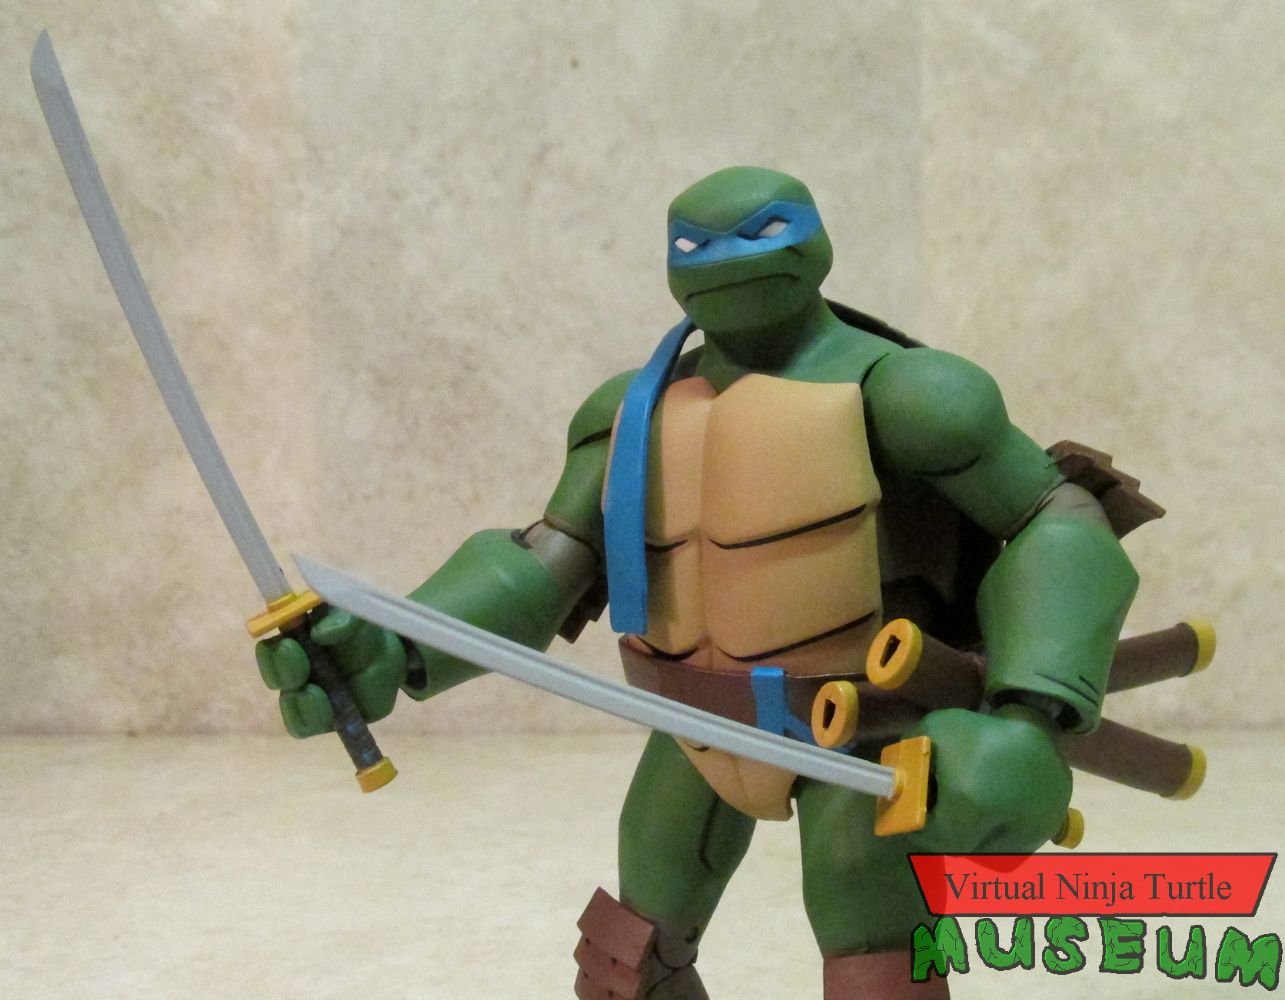 DC Collectibles Batman vs Teenage Mutant Ninja Turtles Figures Review